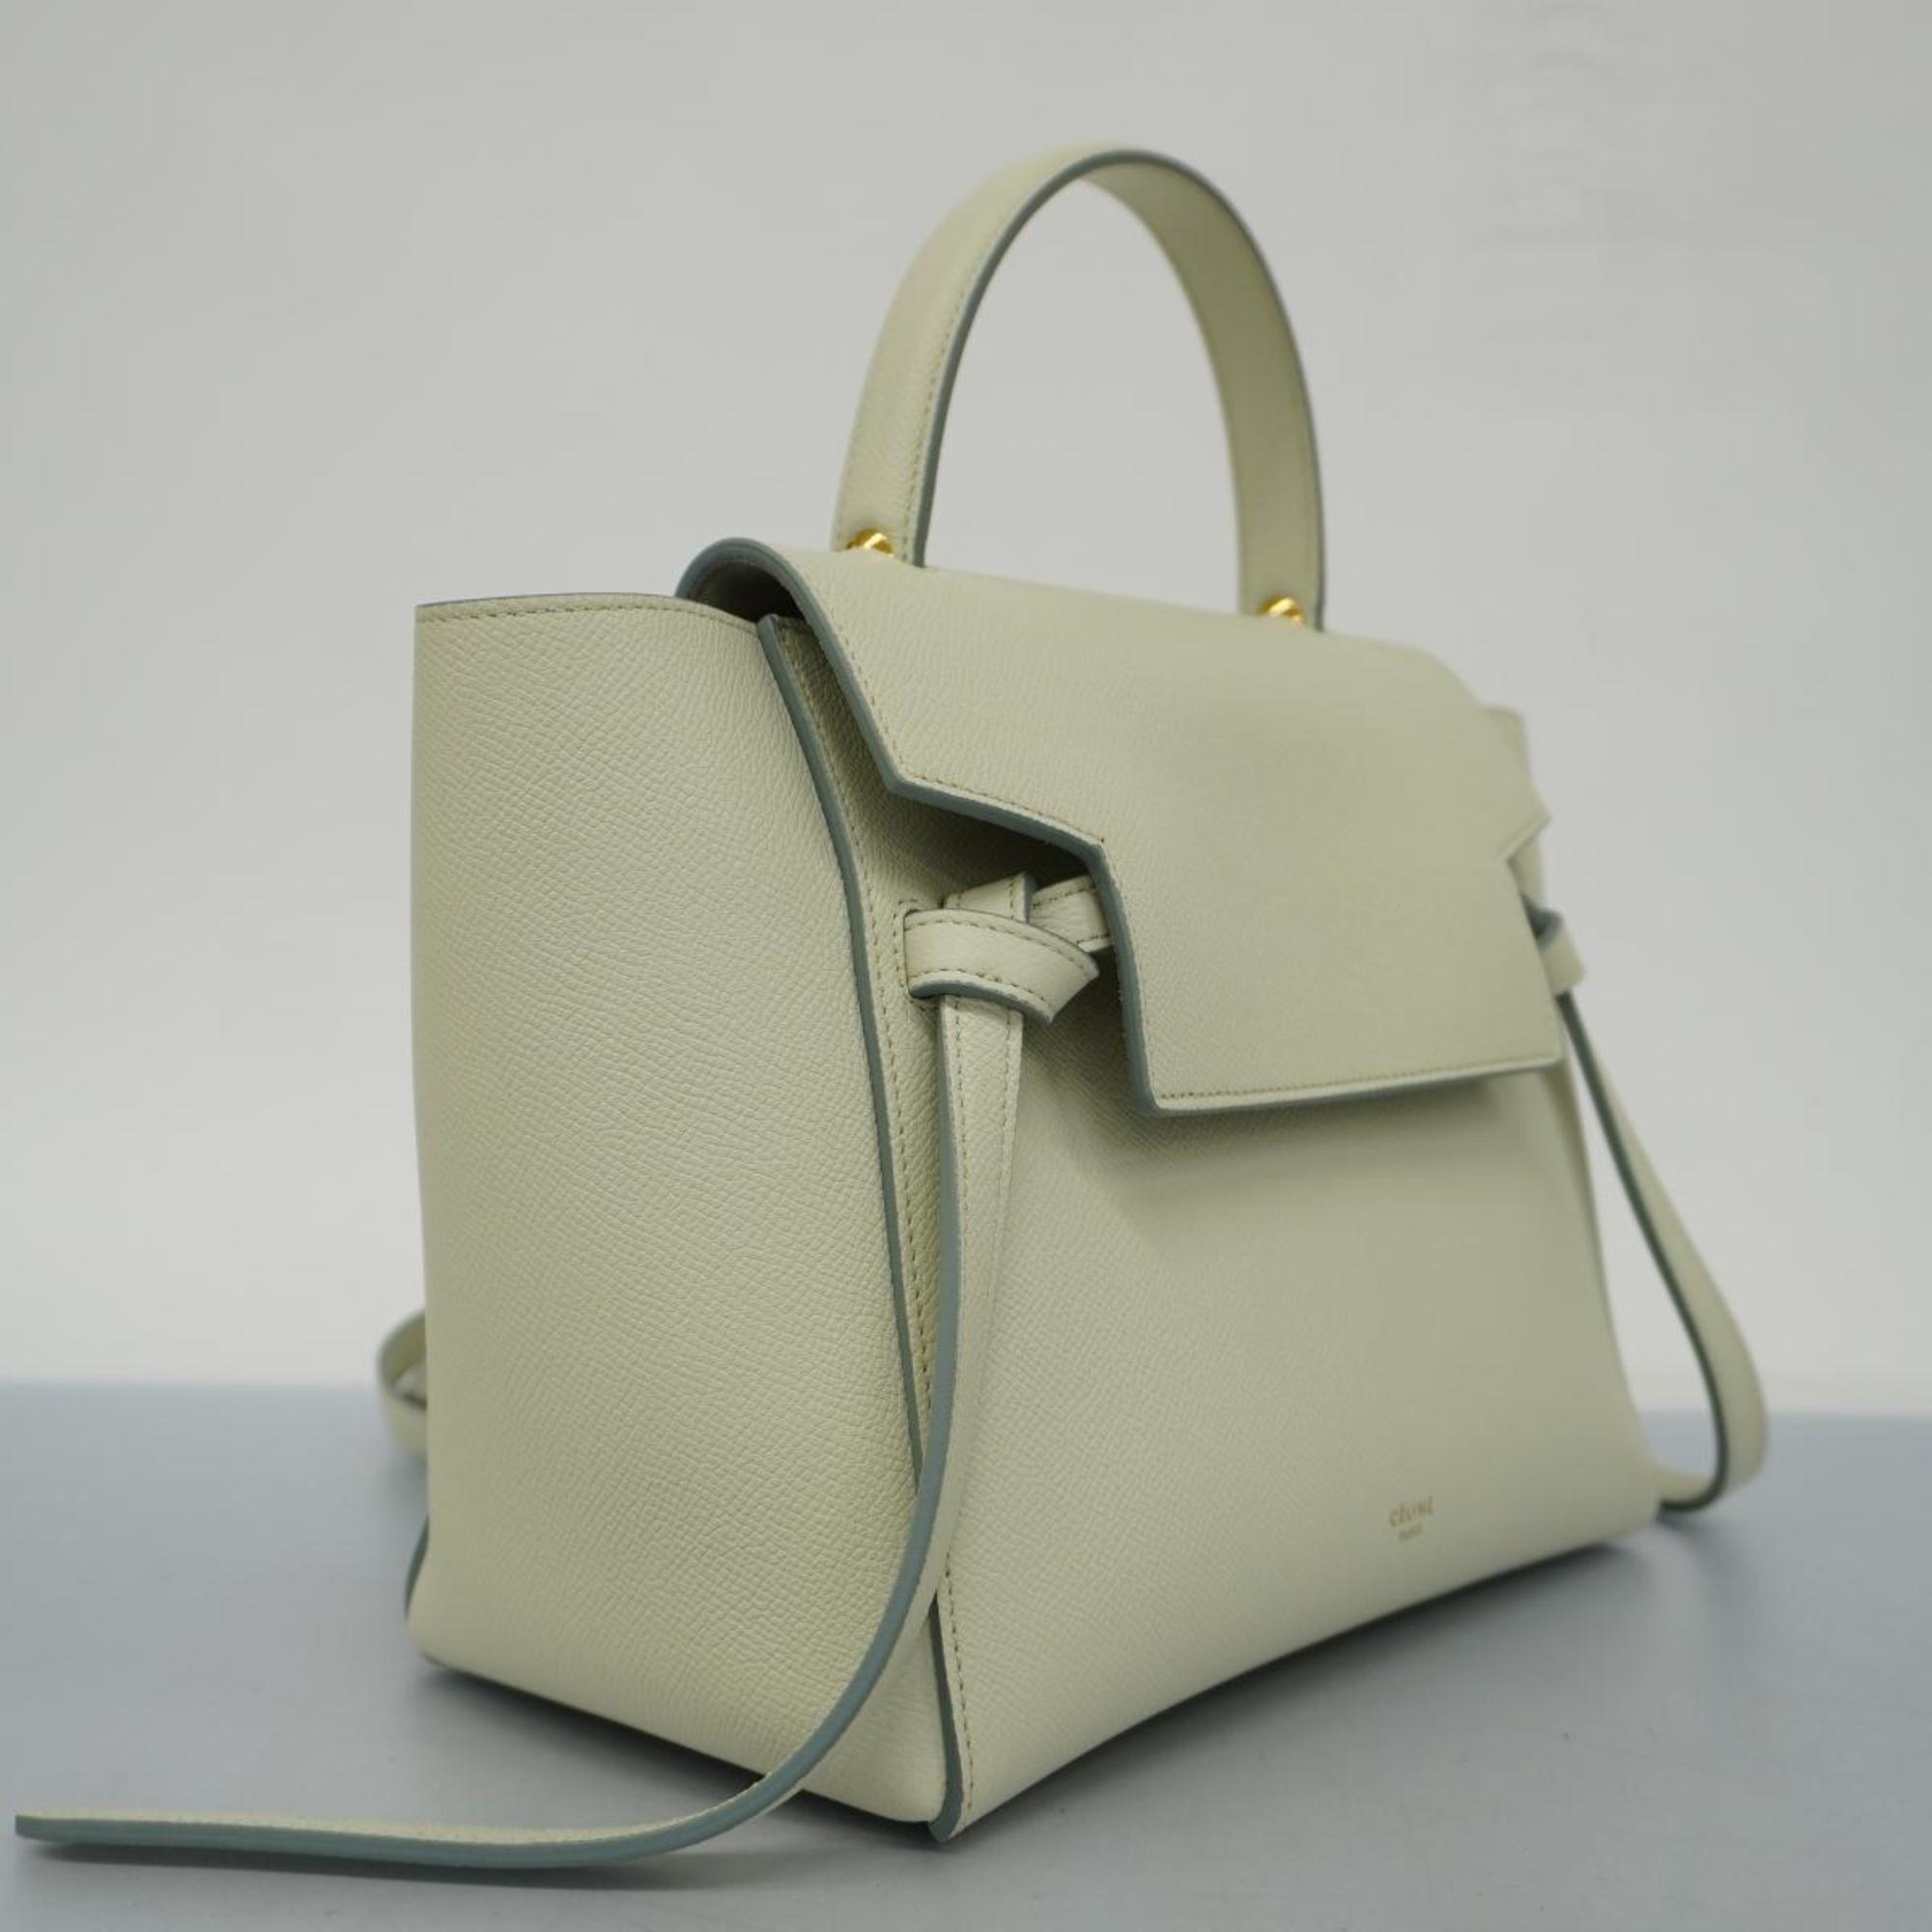 Celine handbag micro belt bag leather white green ladies